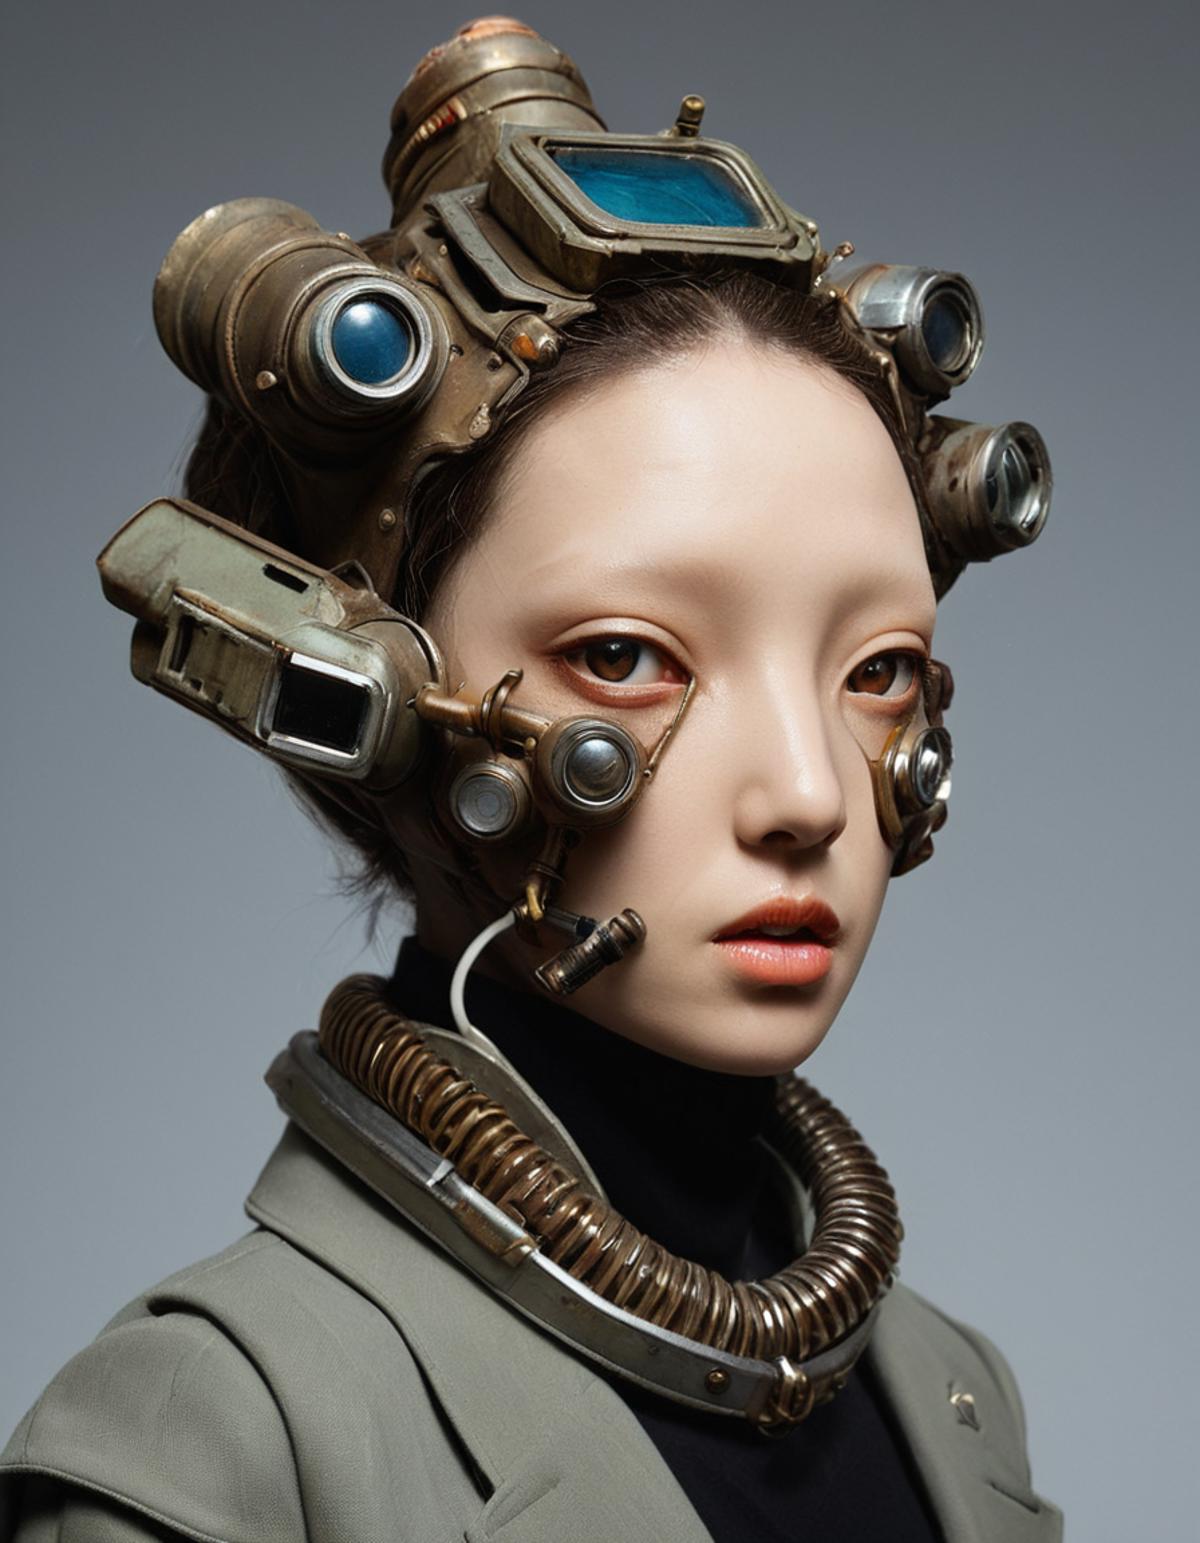 AI model image by cicerothedog